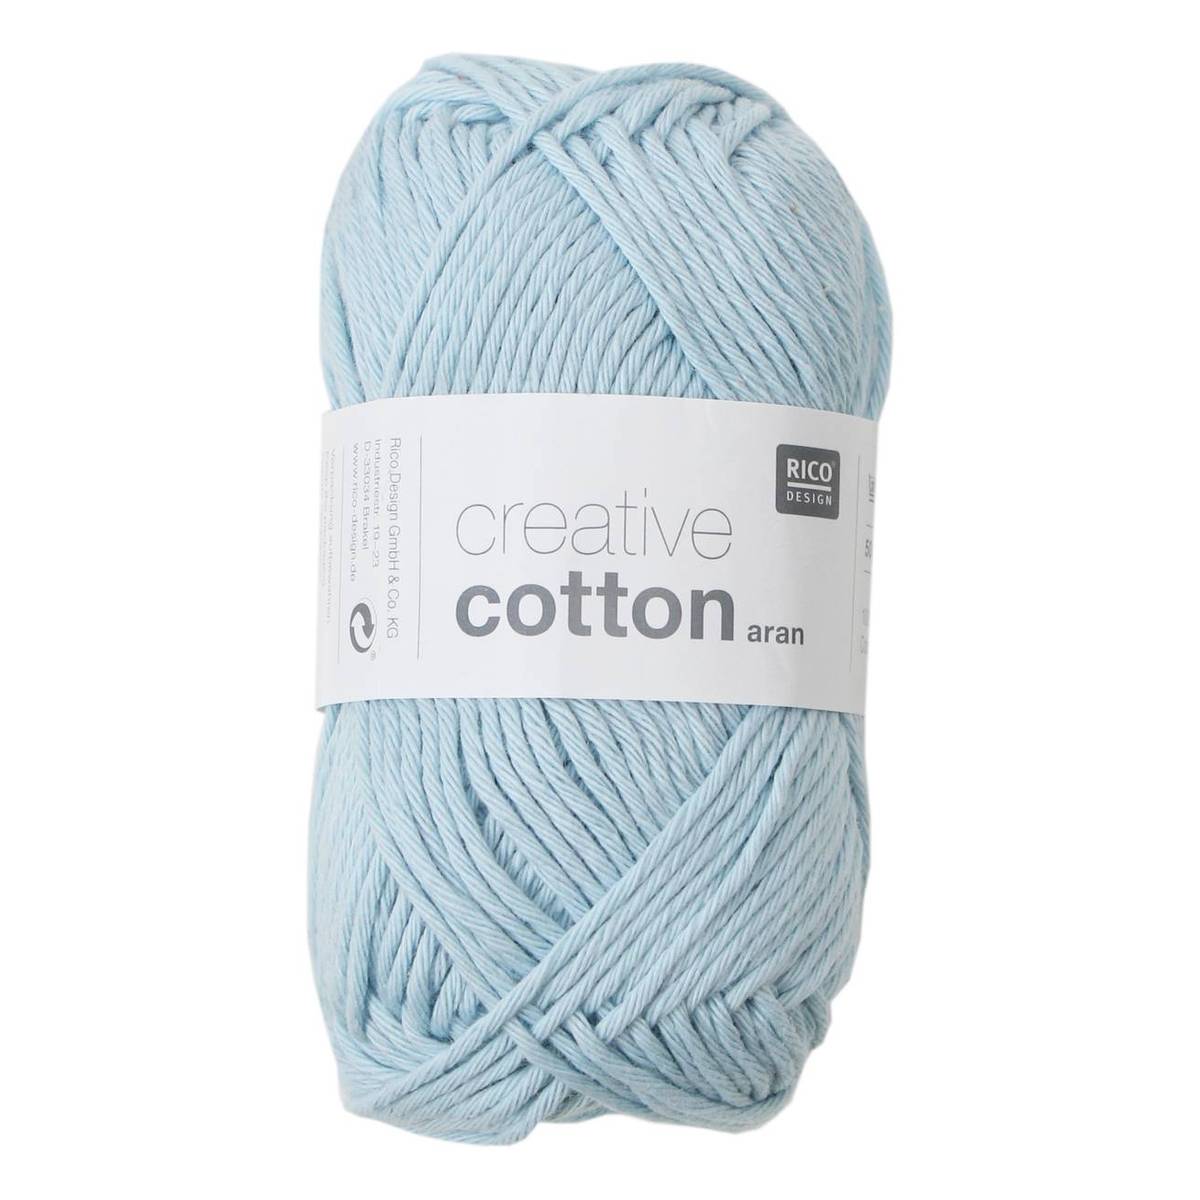 Rico Light Blue Creative Cotton Aran Yarn 50 g | Hobbycraft